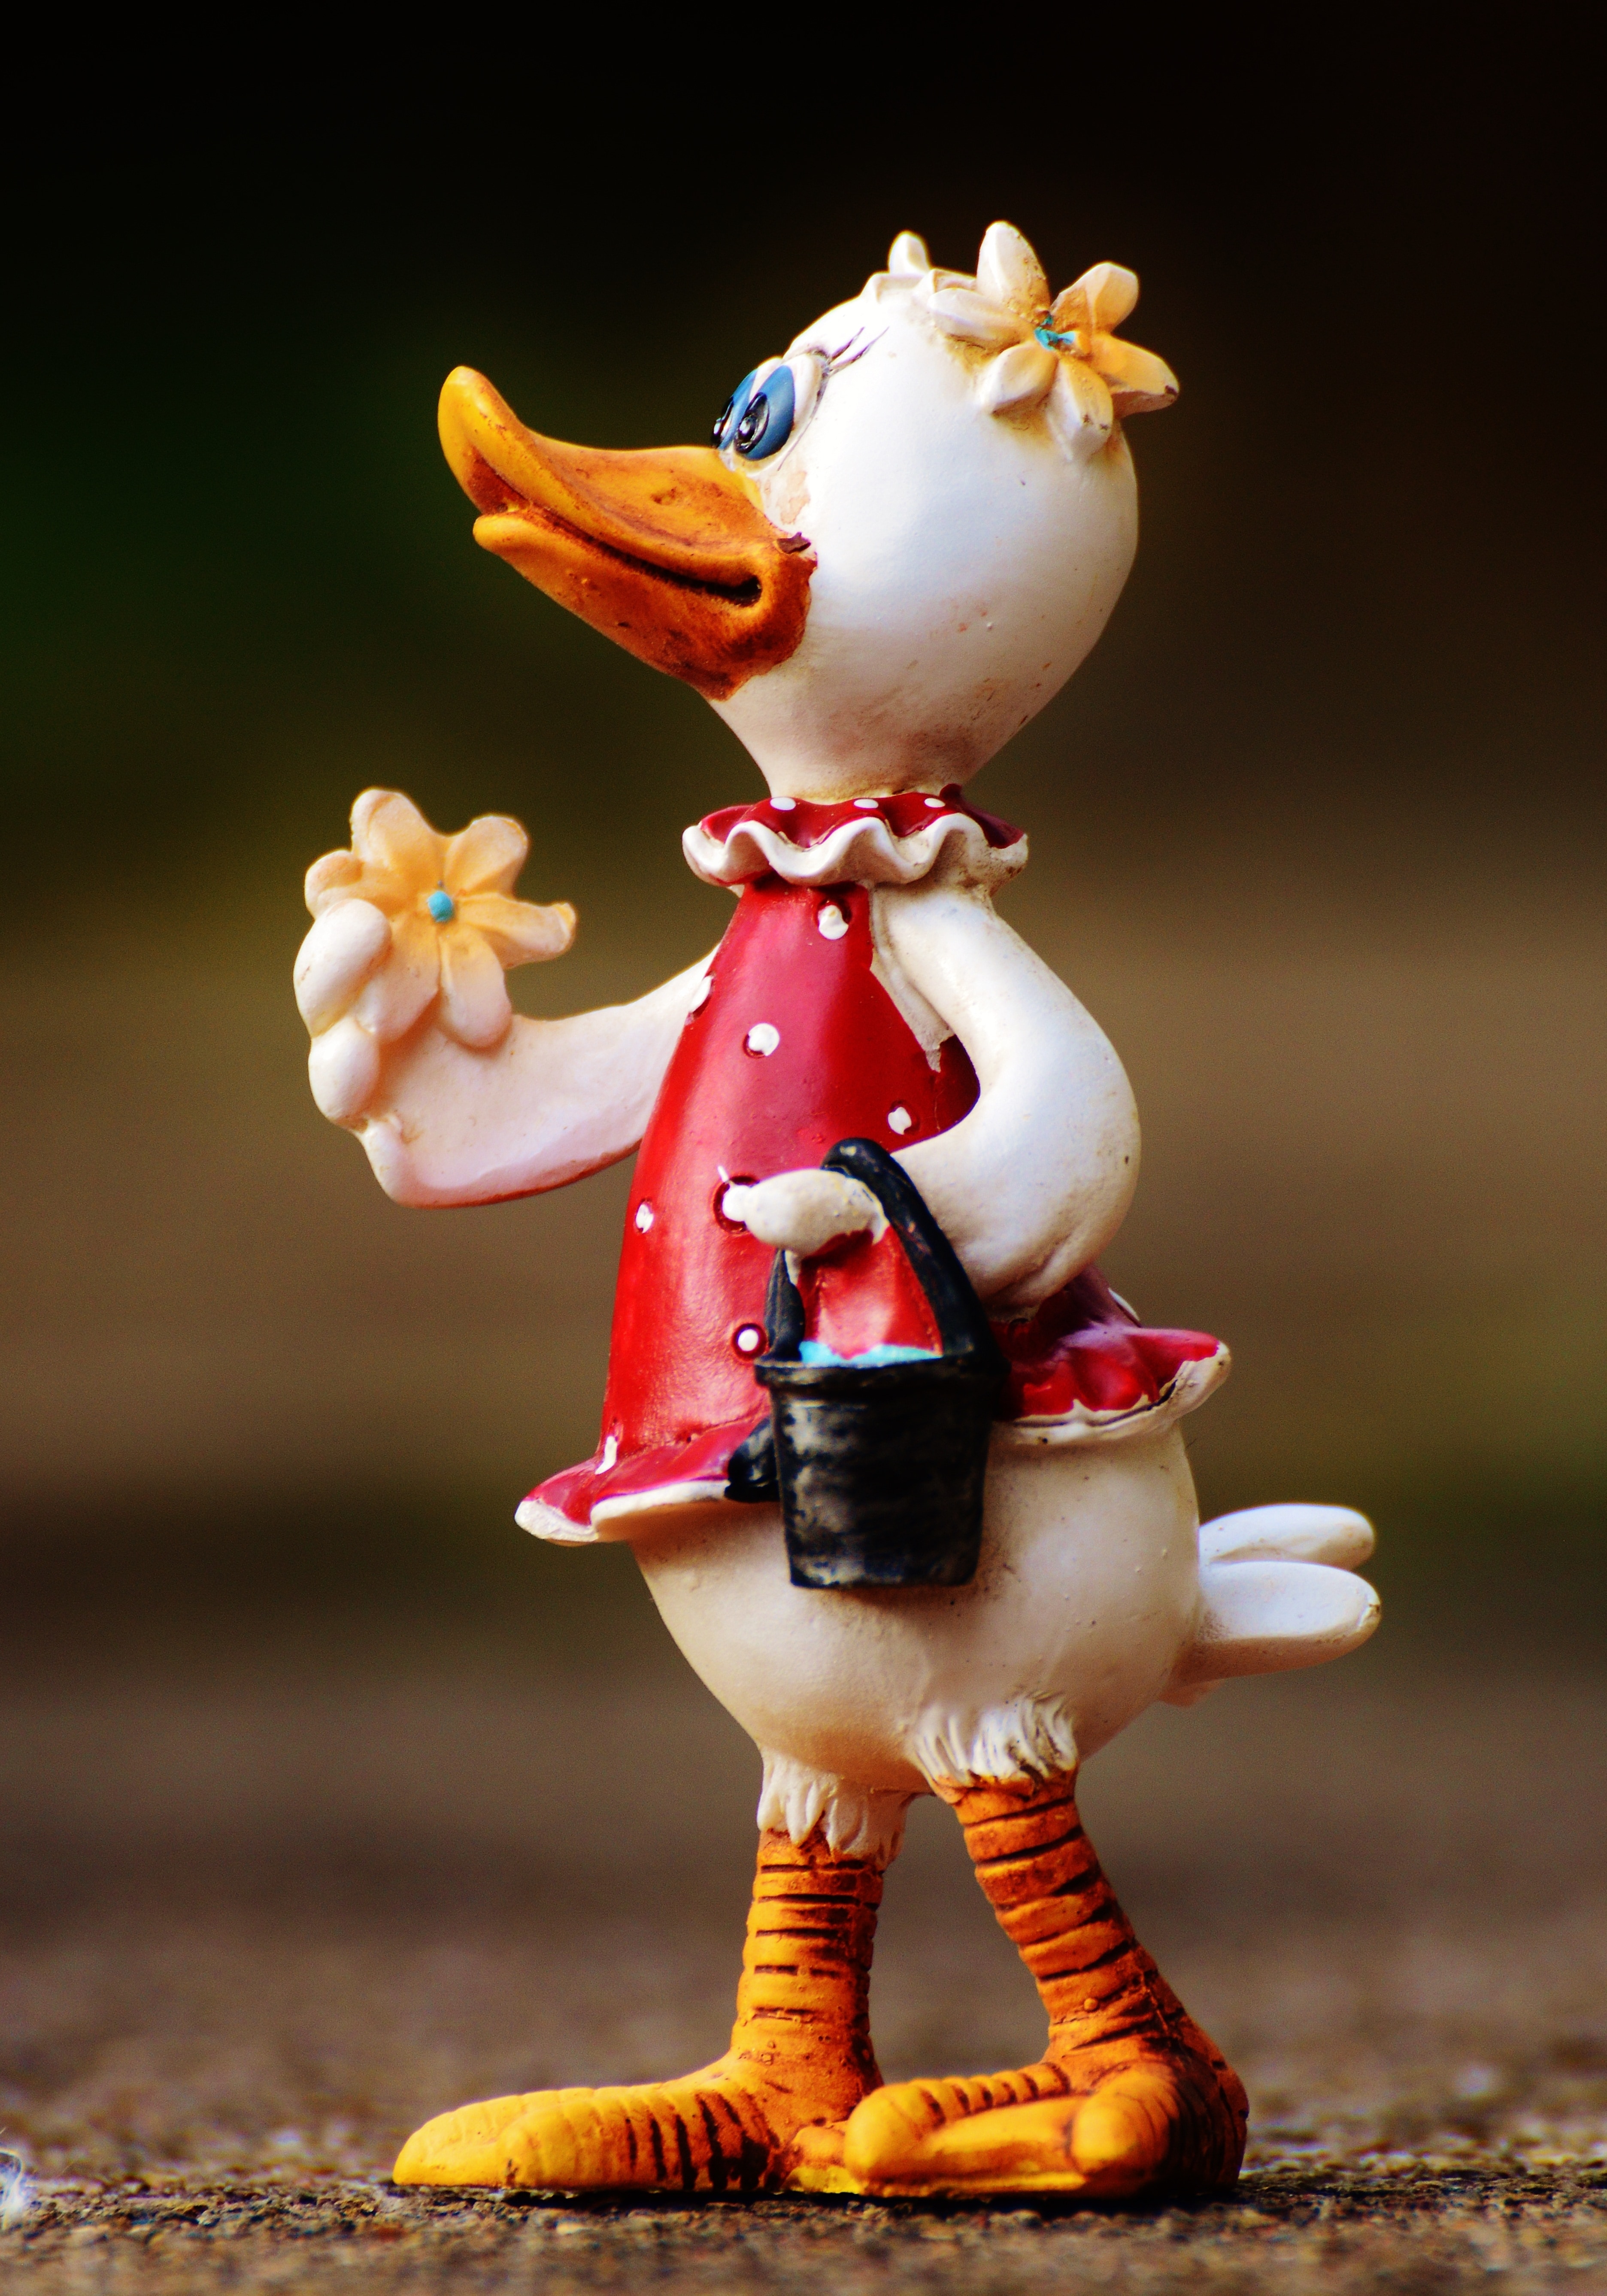 white duck wearing red dress figurine